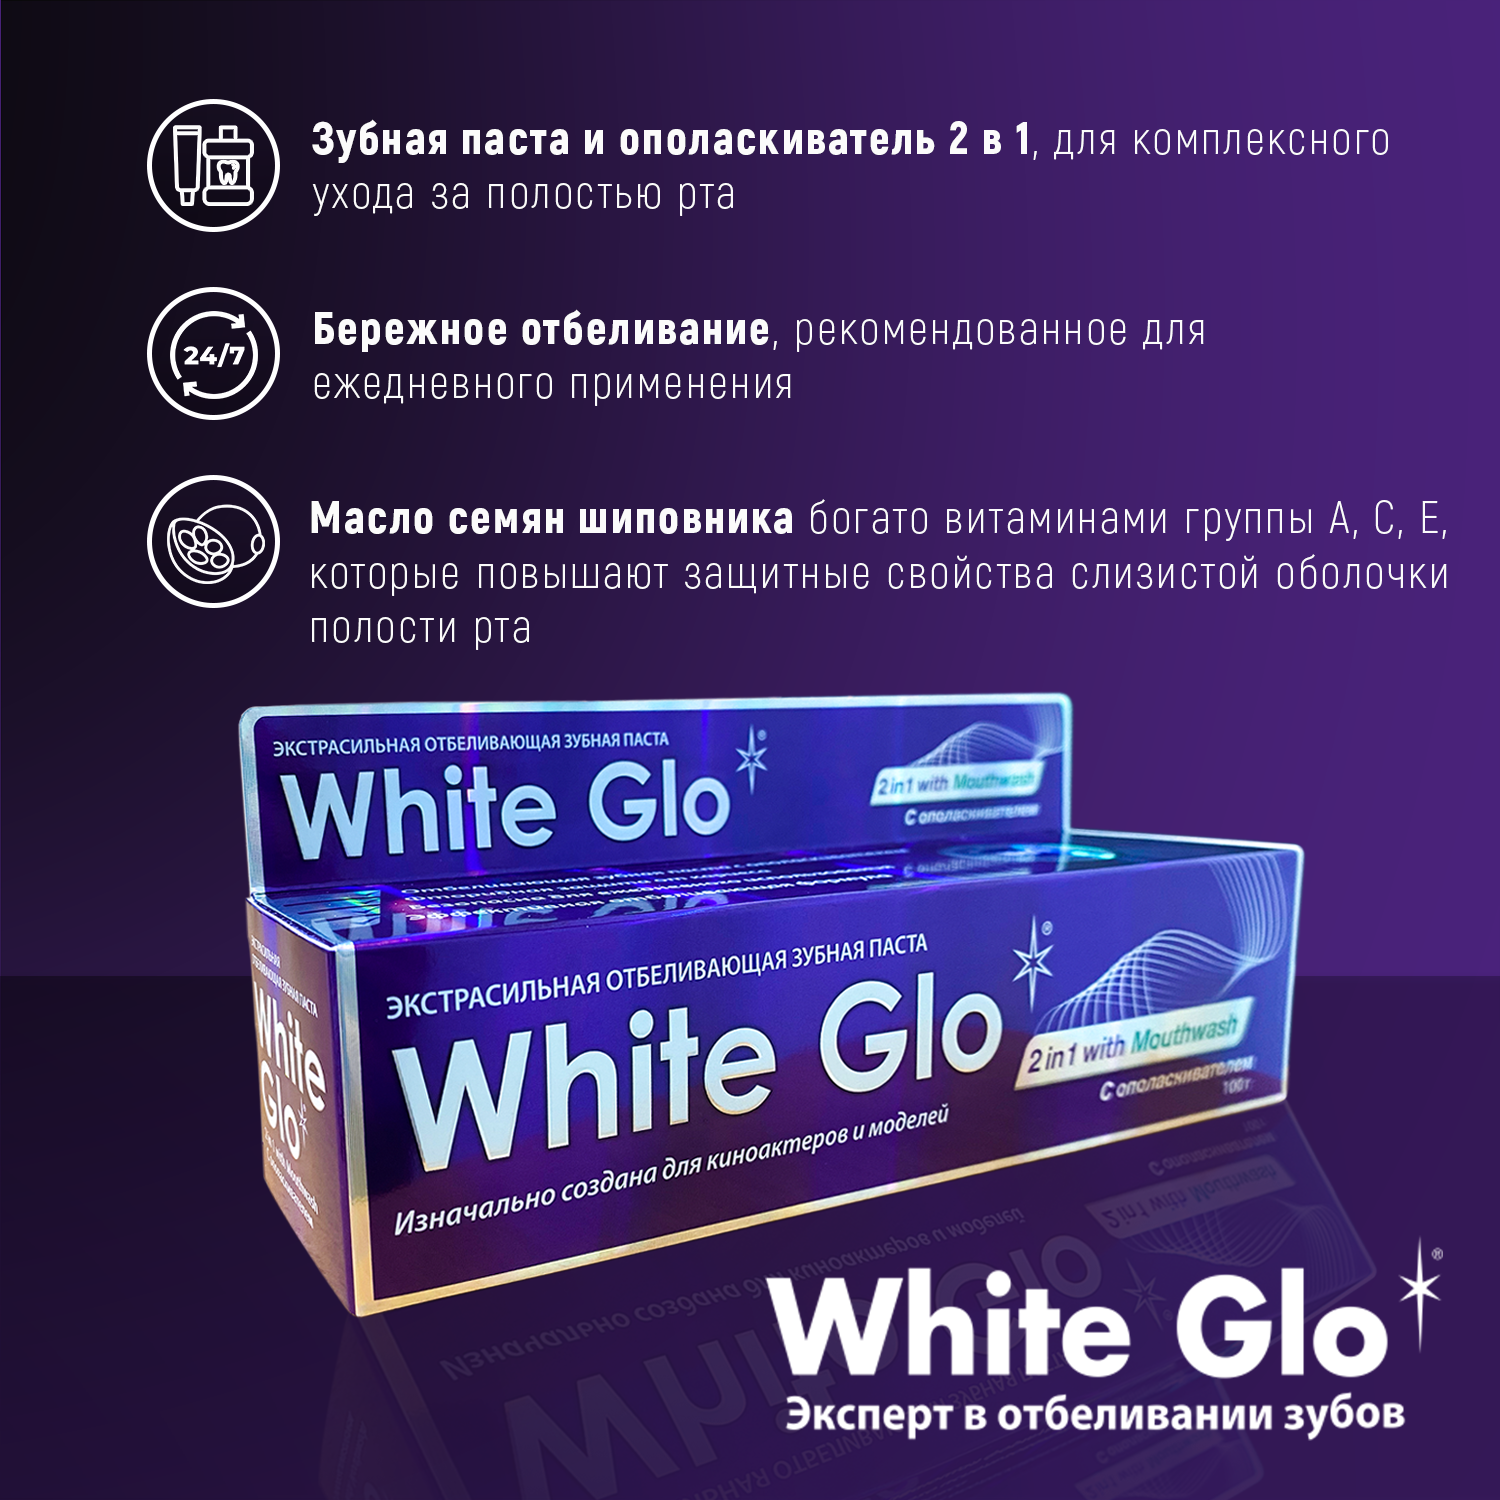 Зубная паста WHITE GLO отбеливающая 2в1 - фото 2